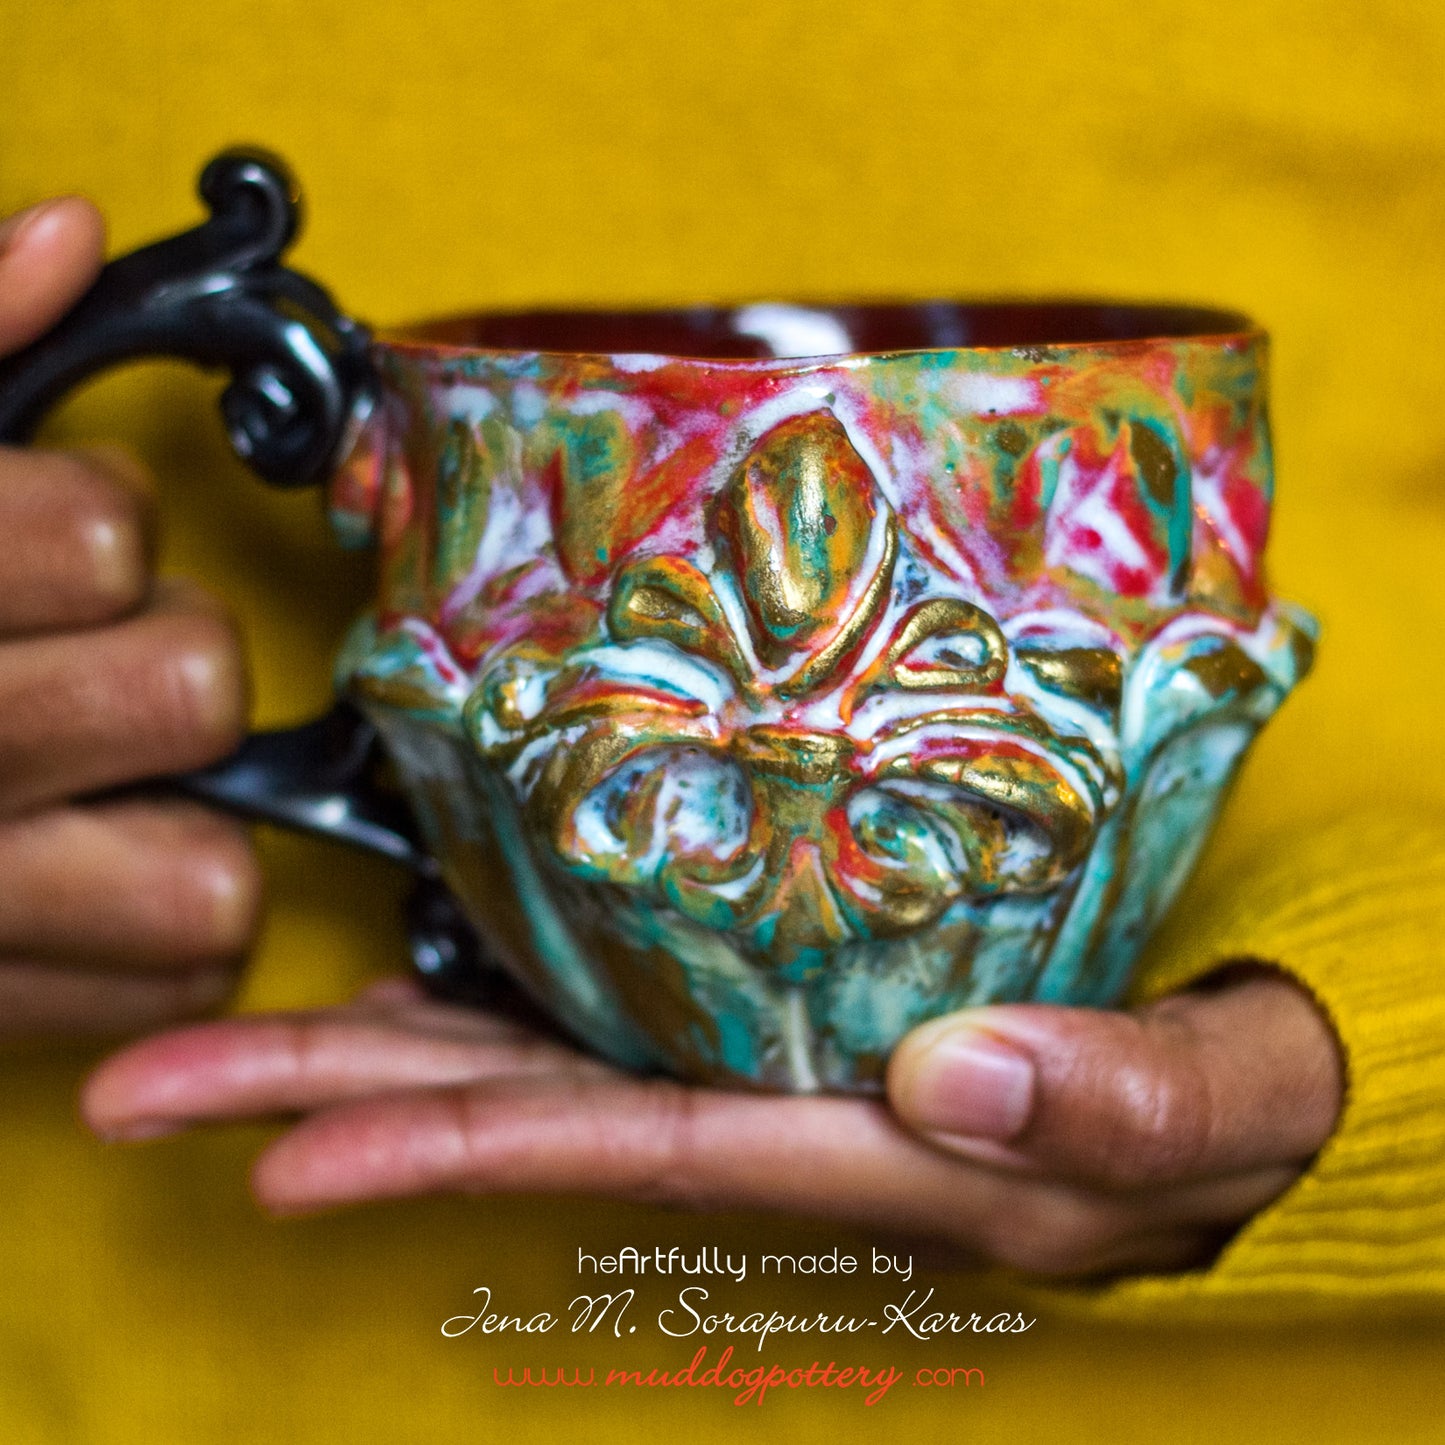 The Creole House Teacup (piti)